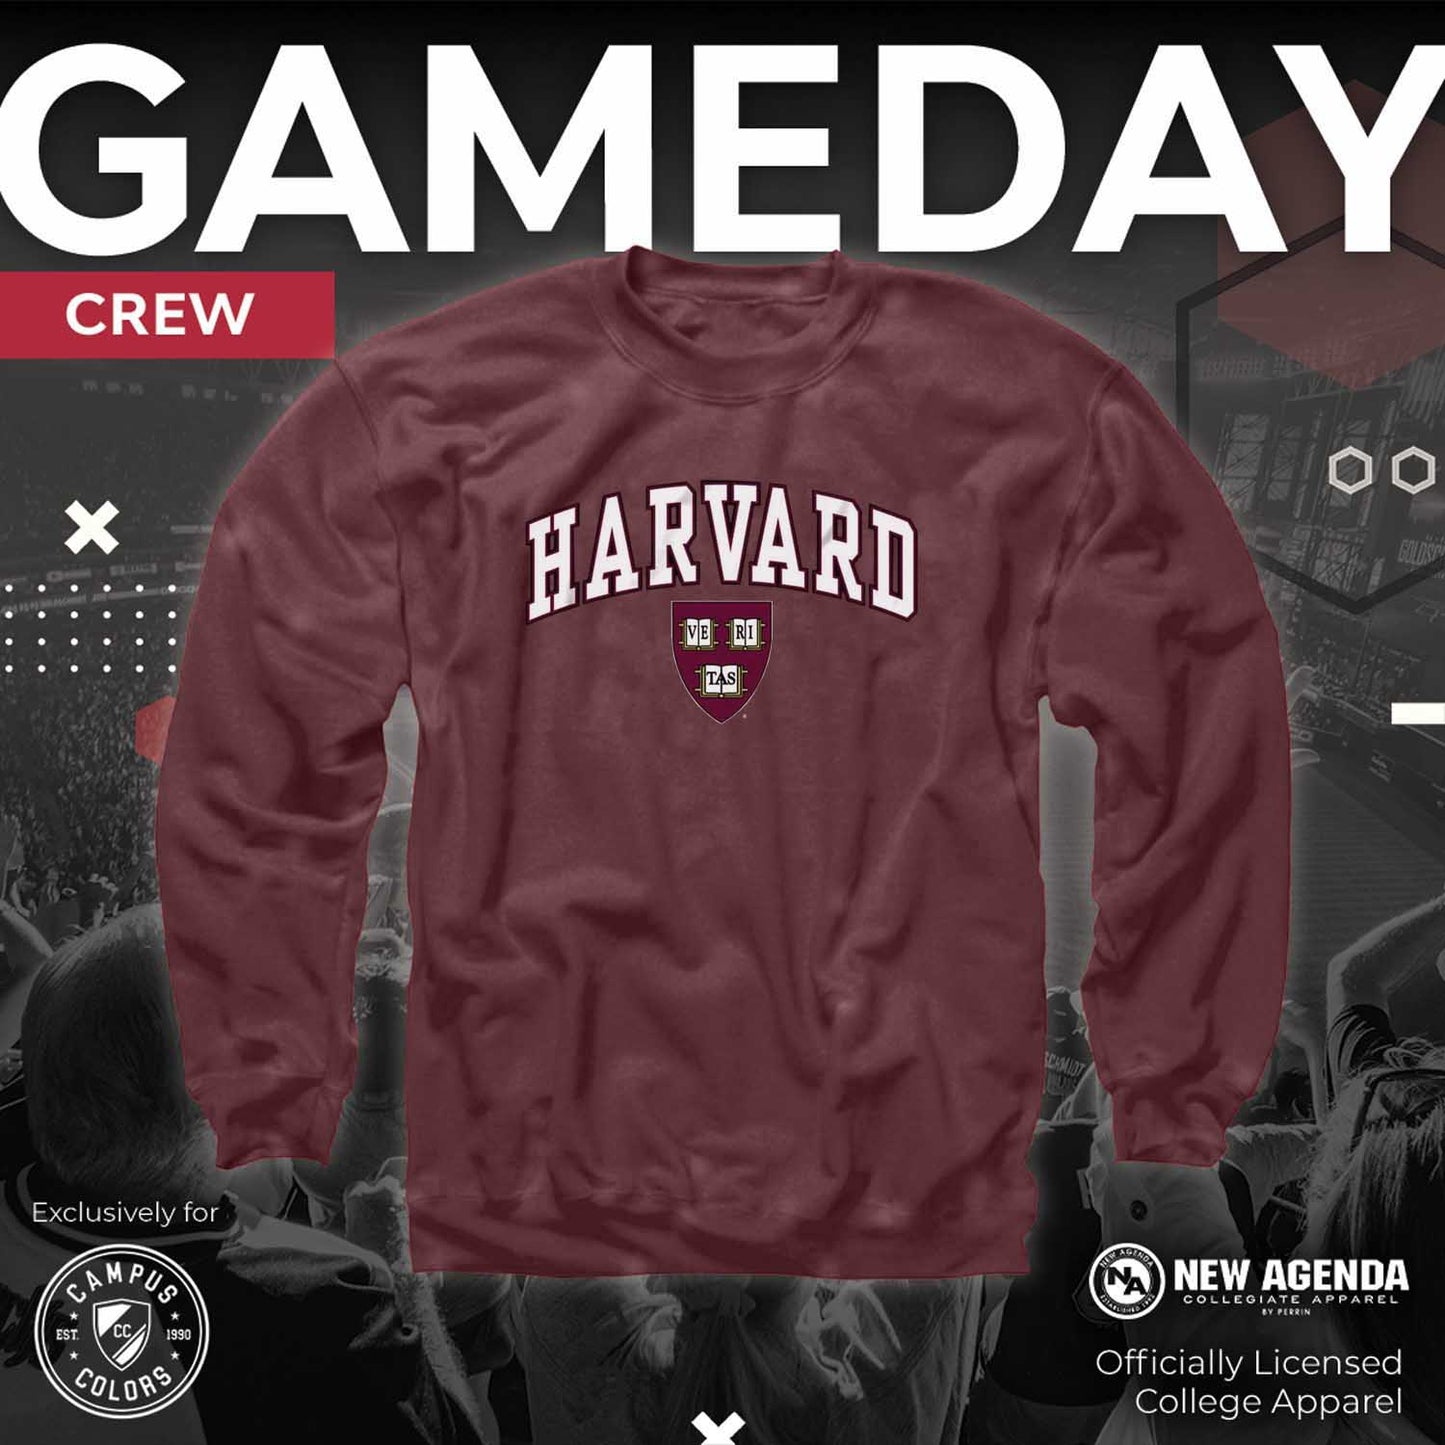 Harvard Crimson Campus Colors Adult Arch & Logo Soft Style Gameday Crewneck Sweatshirt  - Maroon